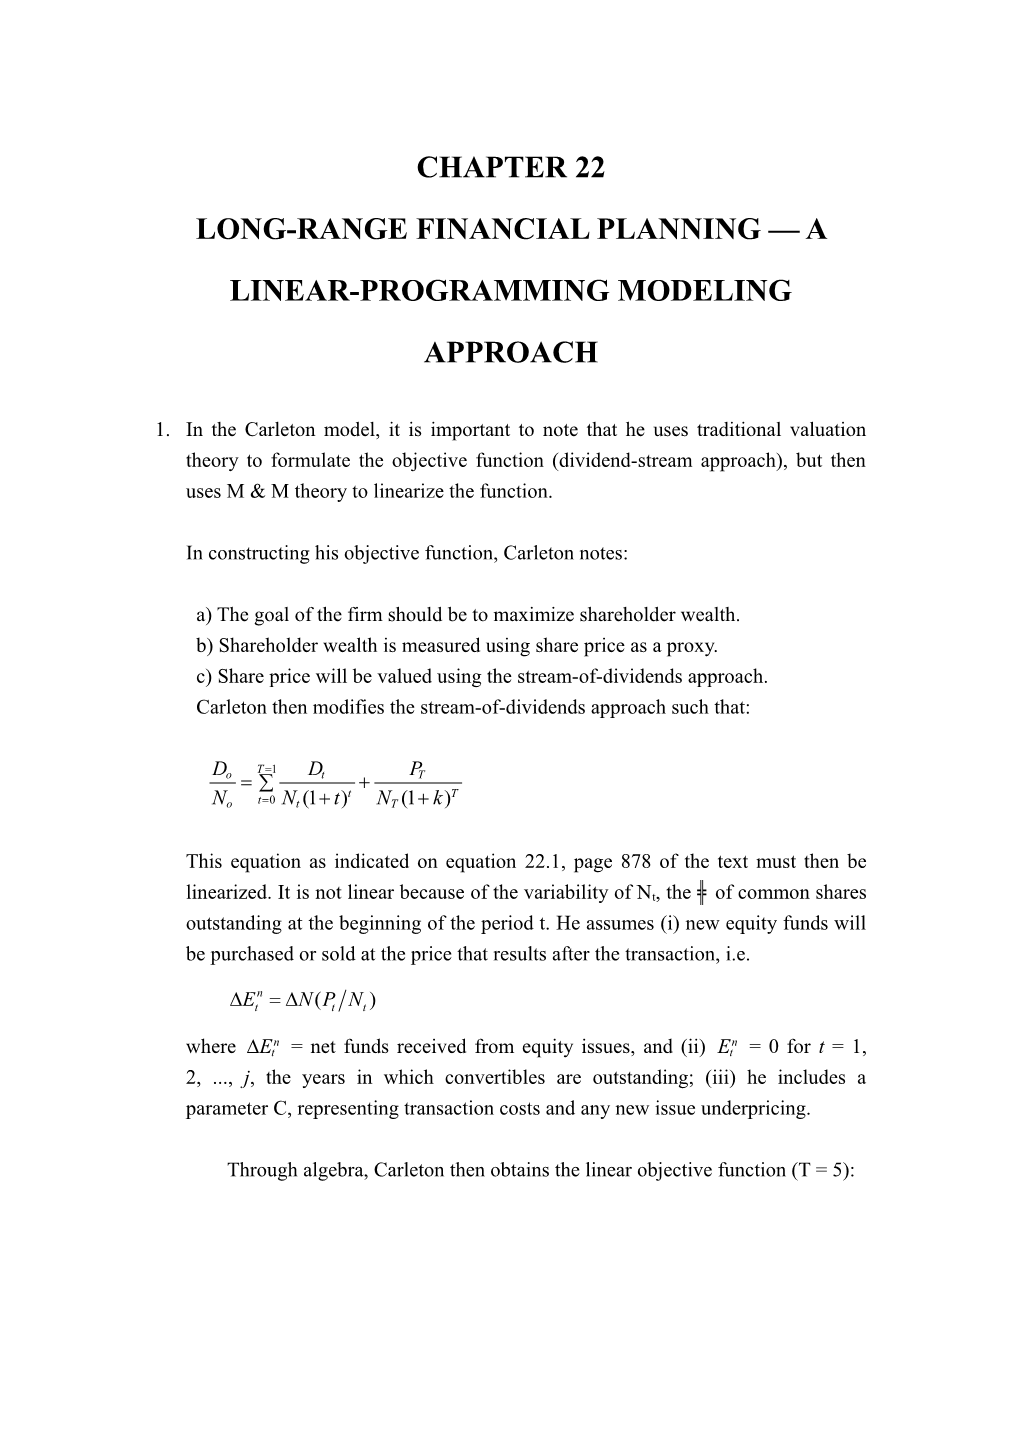 Long-Range Financial Planning a Linear-Programming Modeling Approach